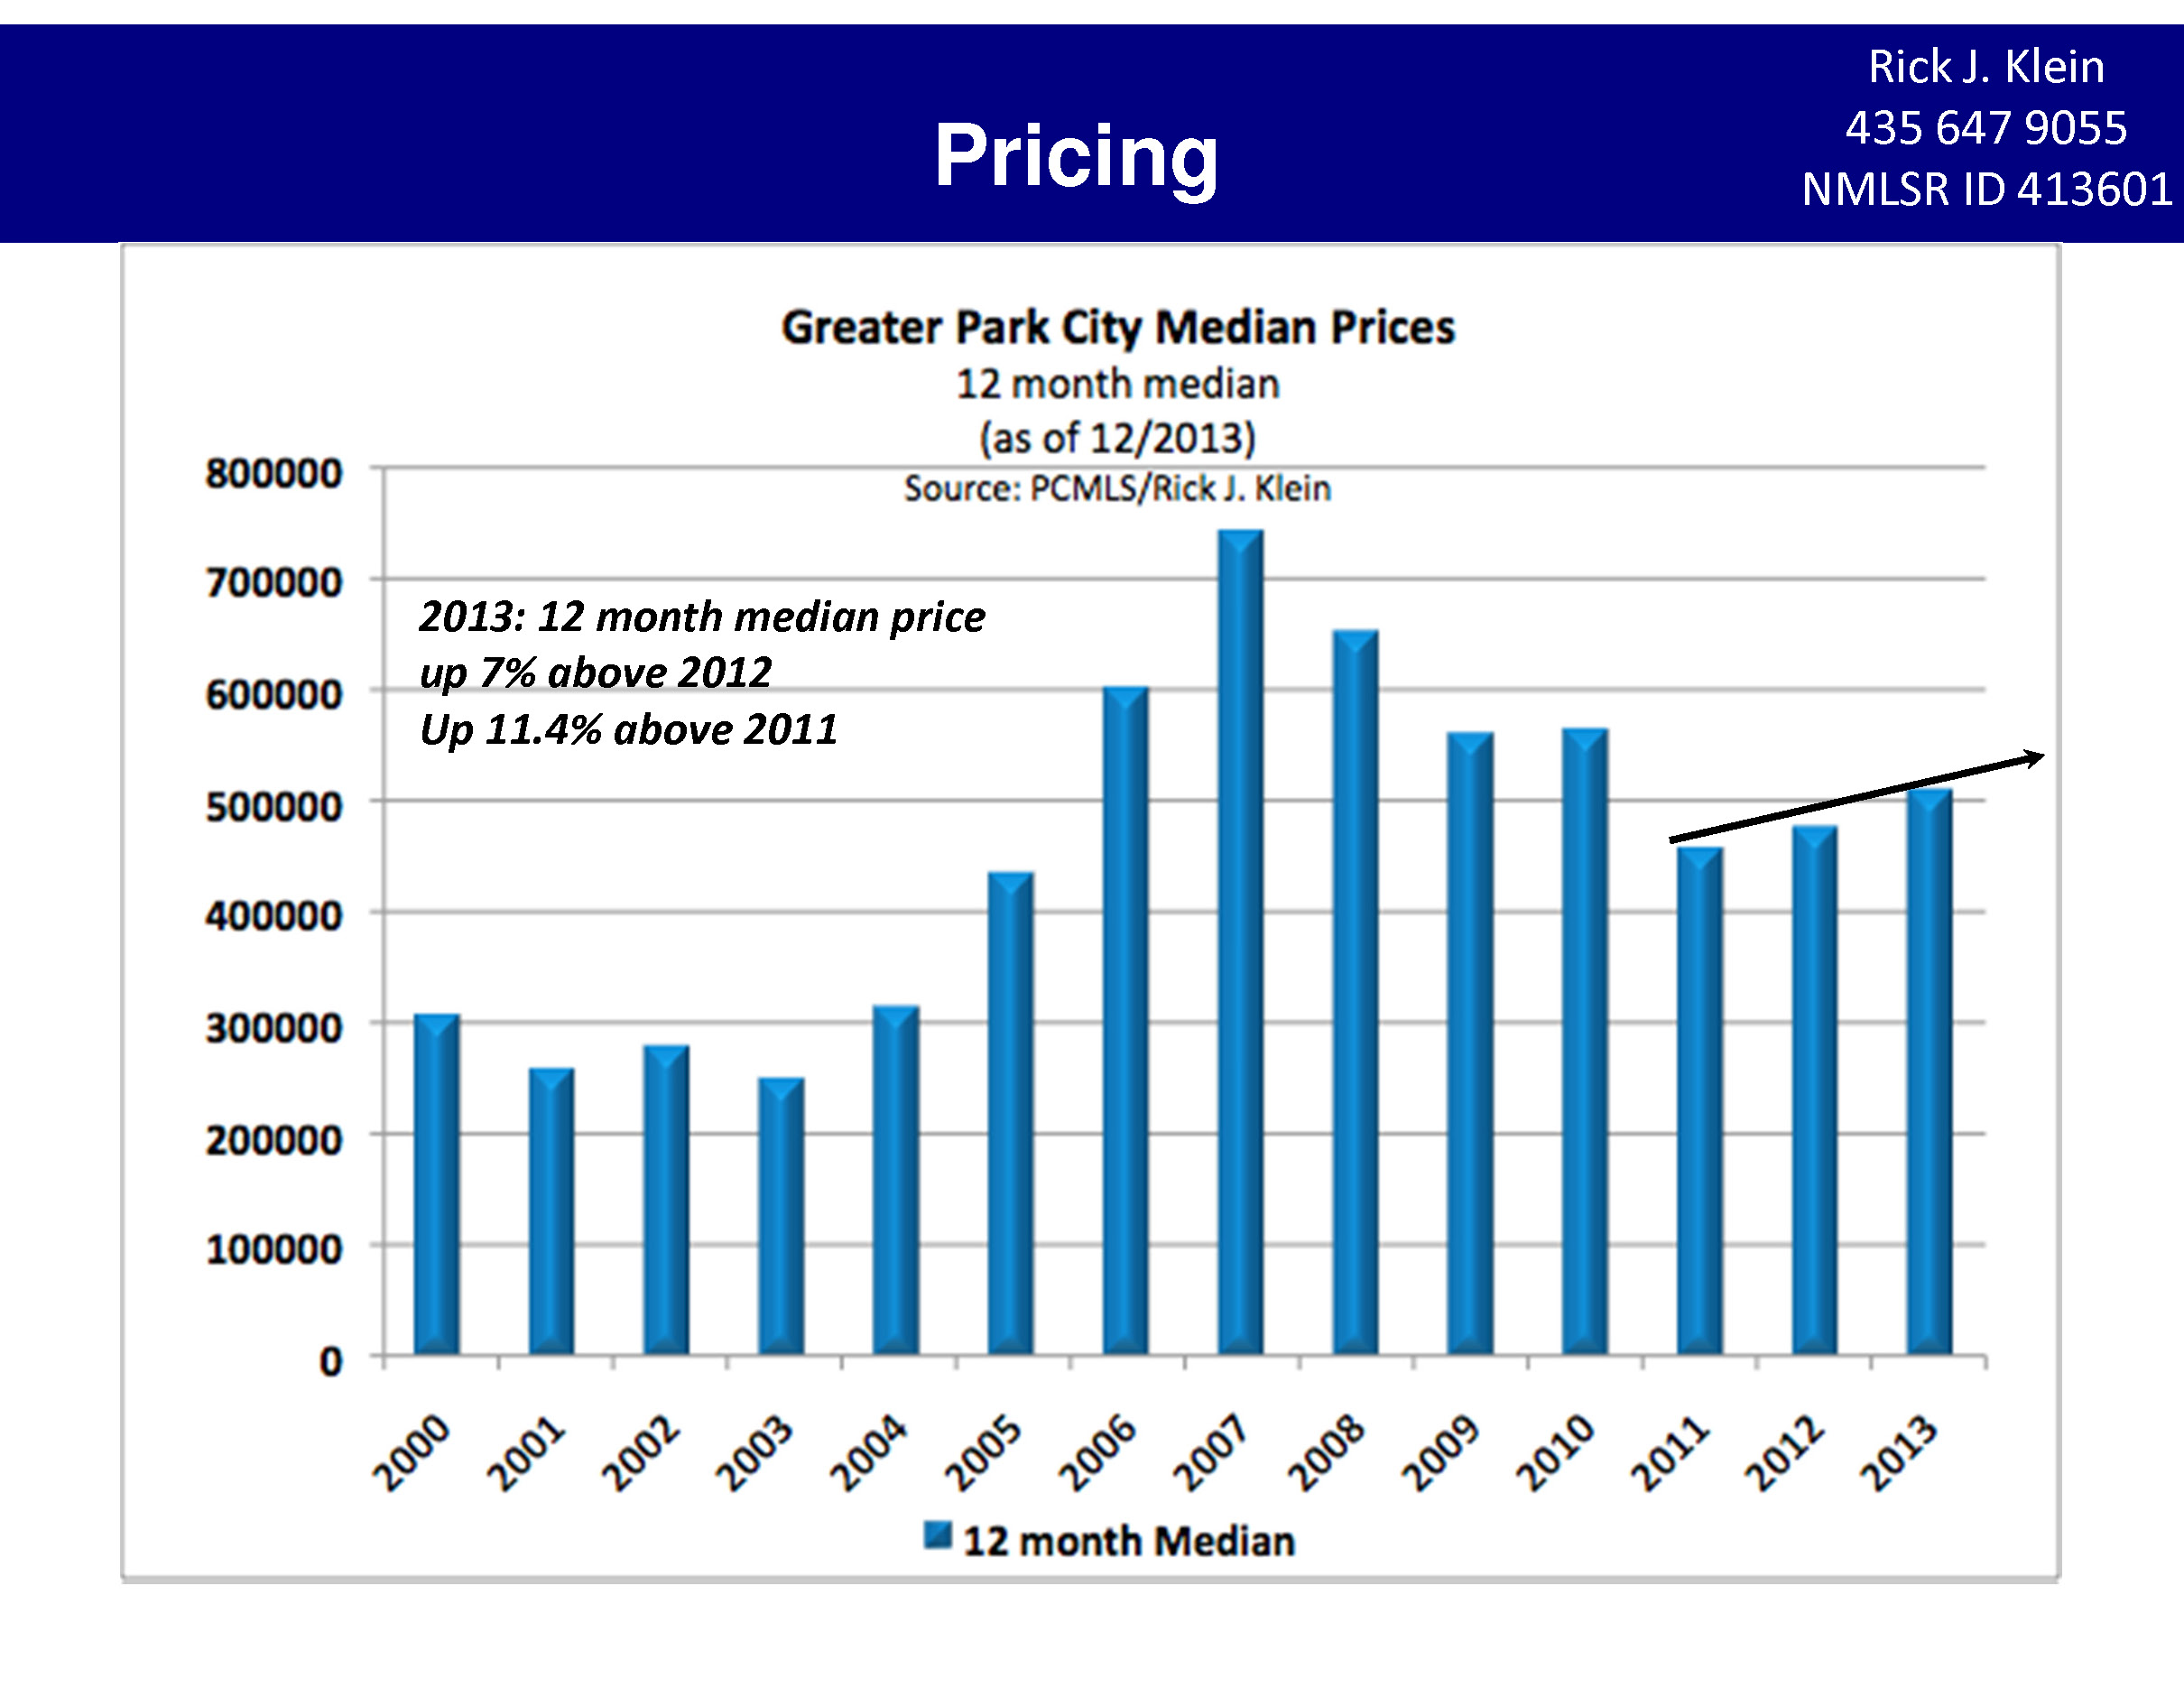 Park City Median Price Trends